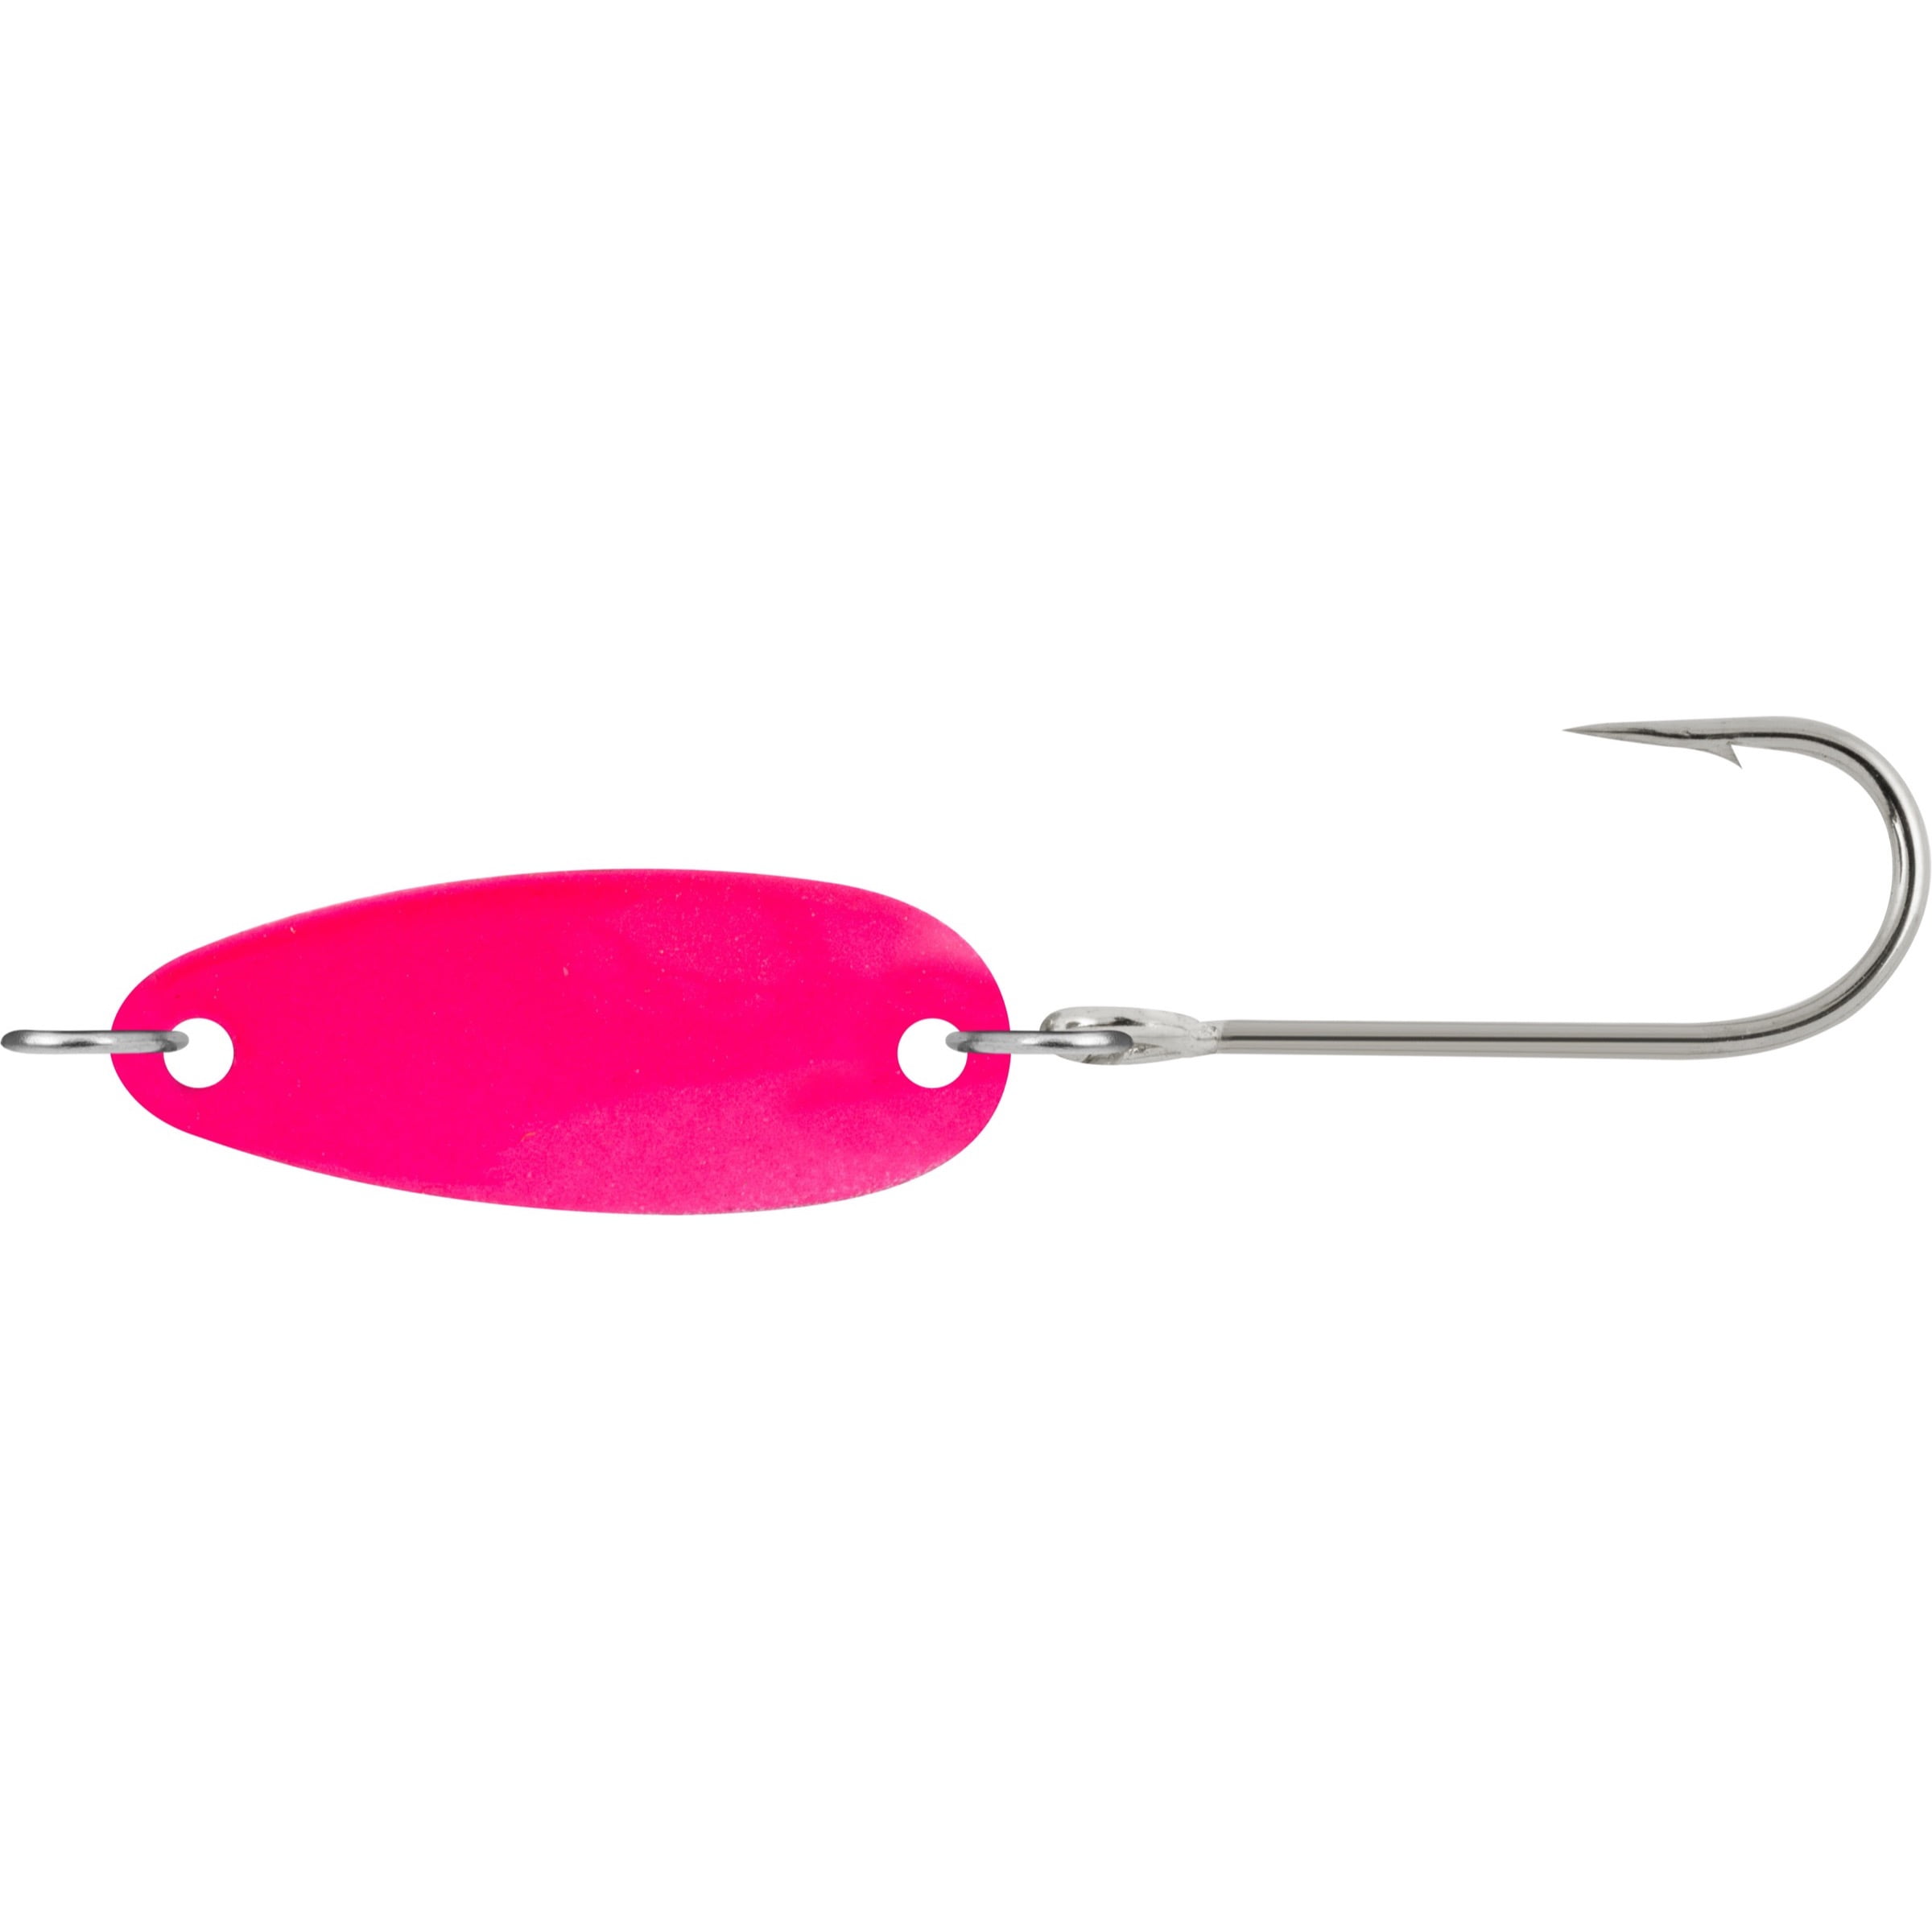 Danielson Dandy Mite Trolling Spoon Freshwater Trout Fishing Lure, Pink, #0  